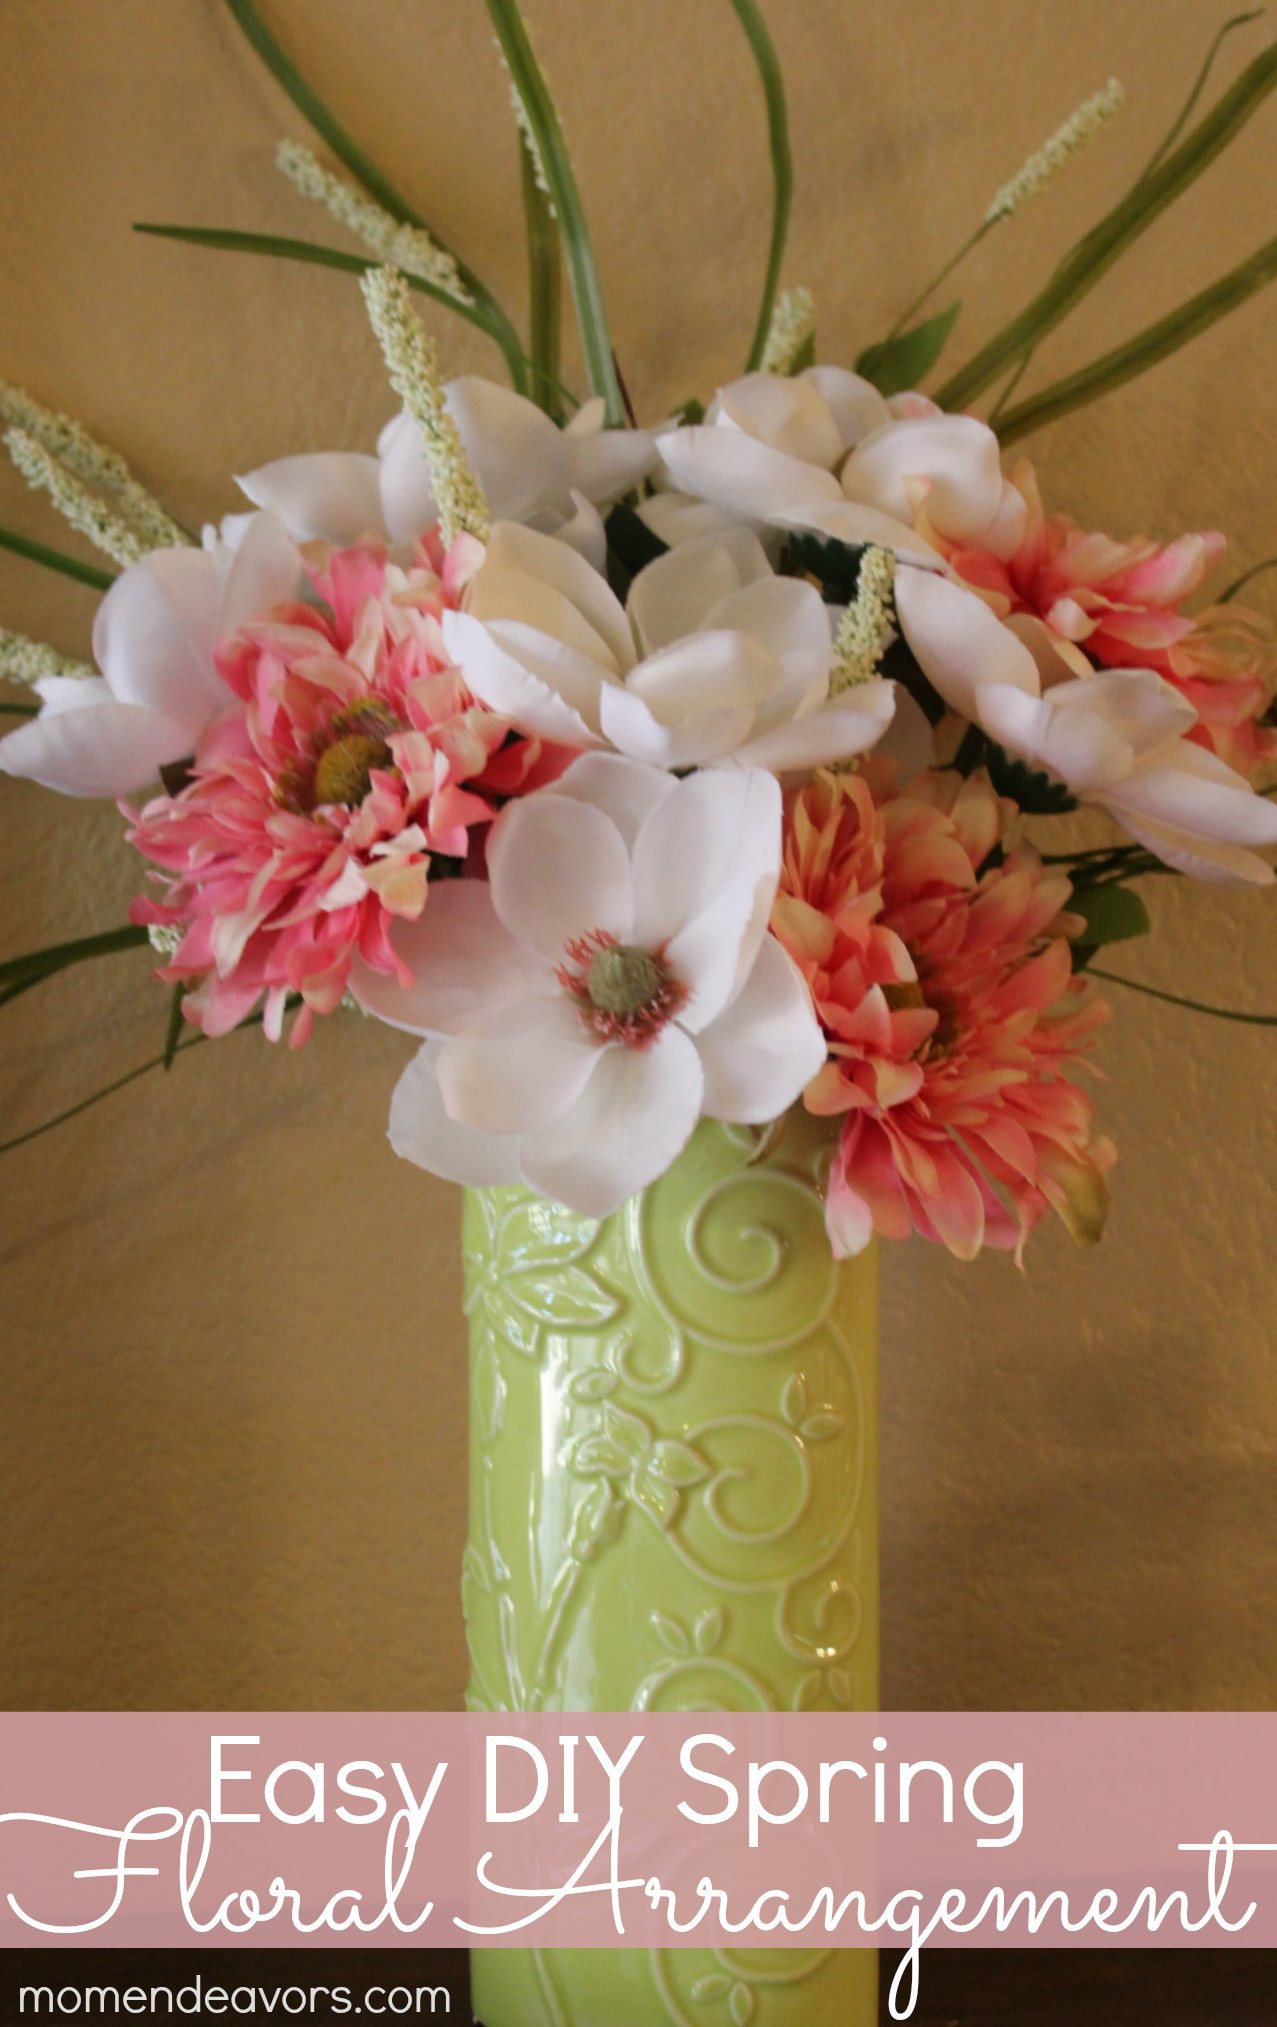 Best ideas about DIY Flower Arrangements
. Save or Pin Easy DIY Spring Flower Arrangement Now.